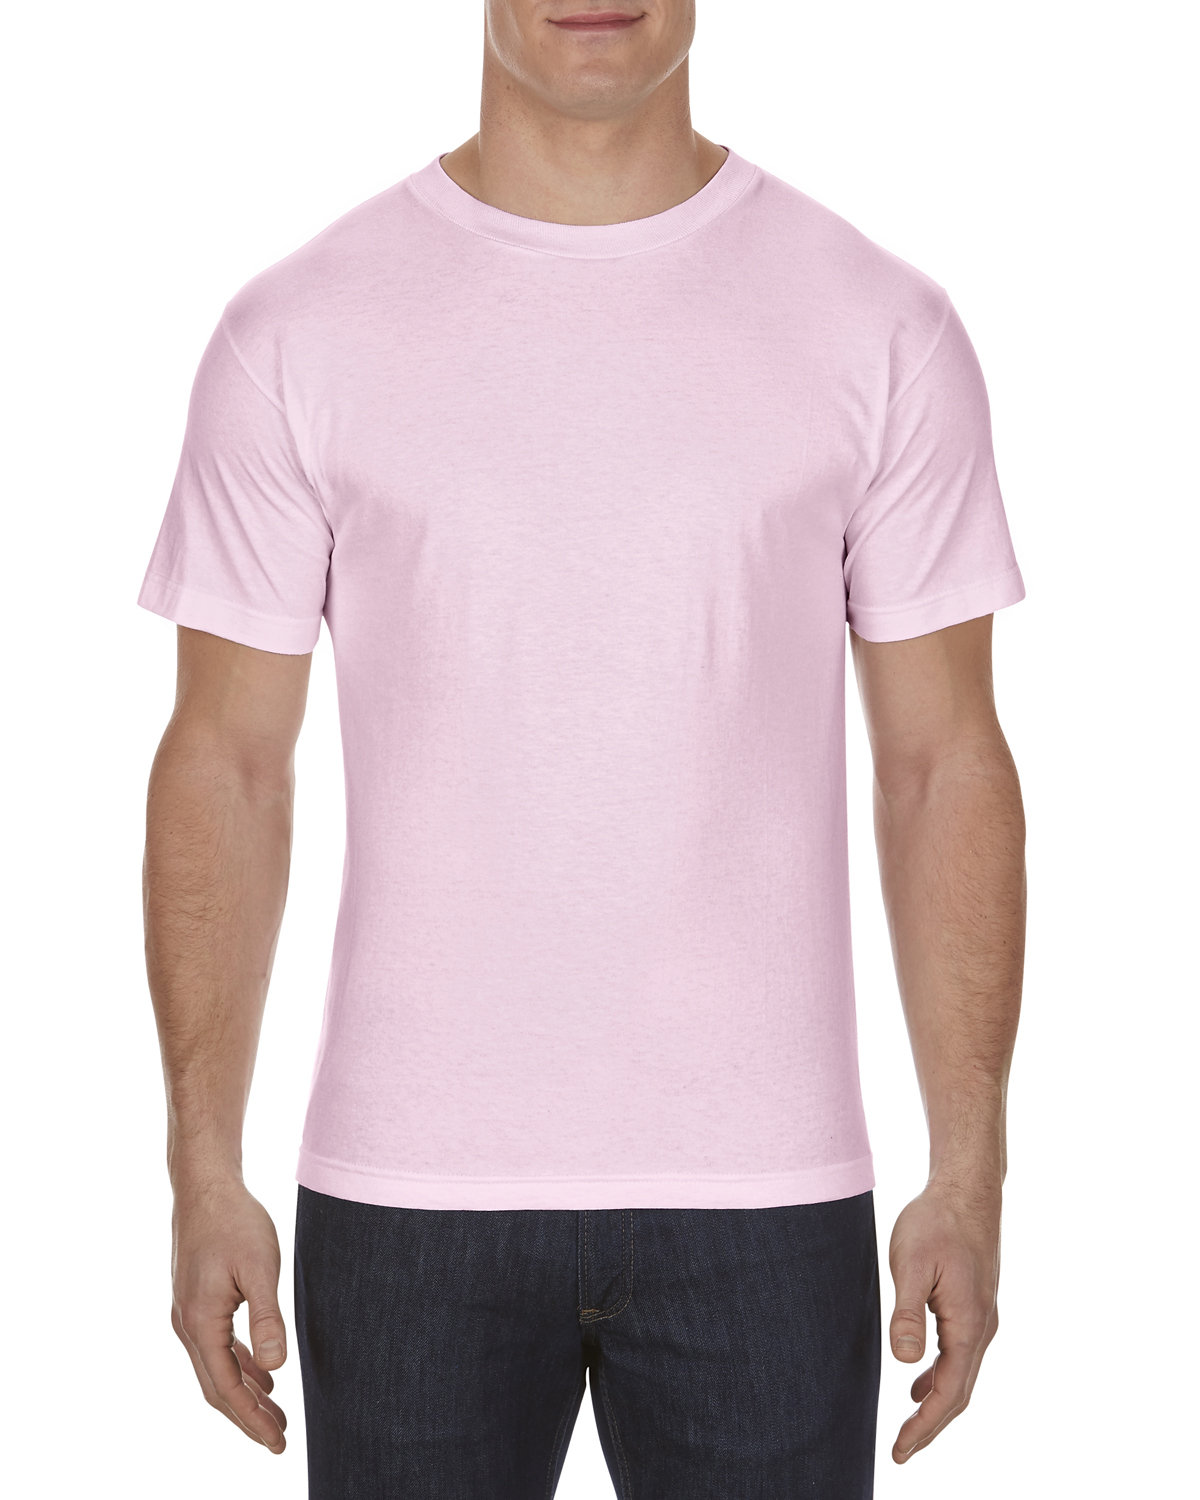 American Apparel Adult 6.0 oz., 100% Cotton T-Shirt PINK 